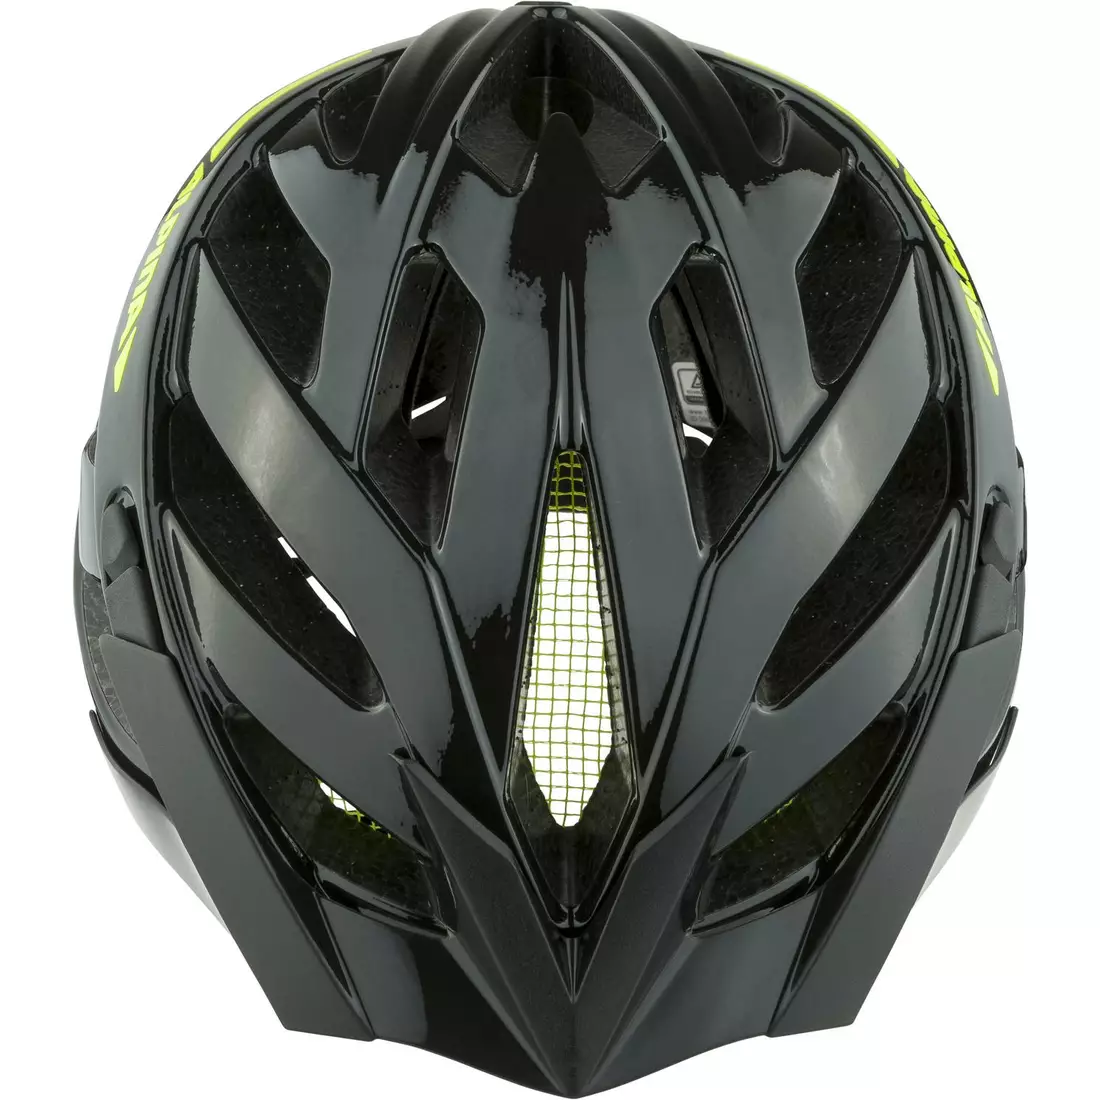 ALPINA PANOMA 2.0 MTB bicycle helmet, black-neon yellow gloss